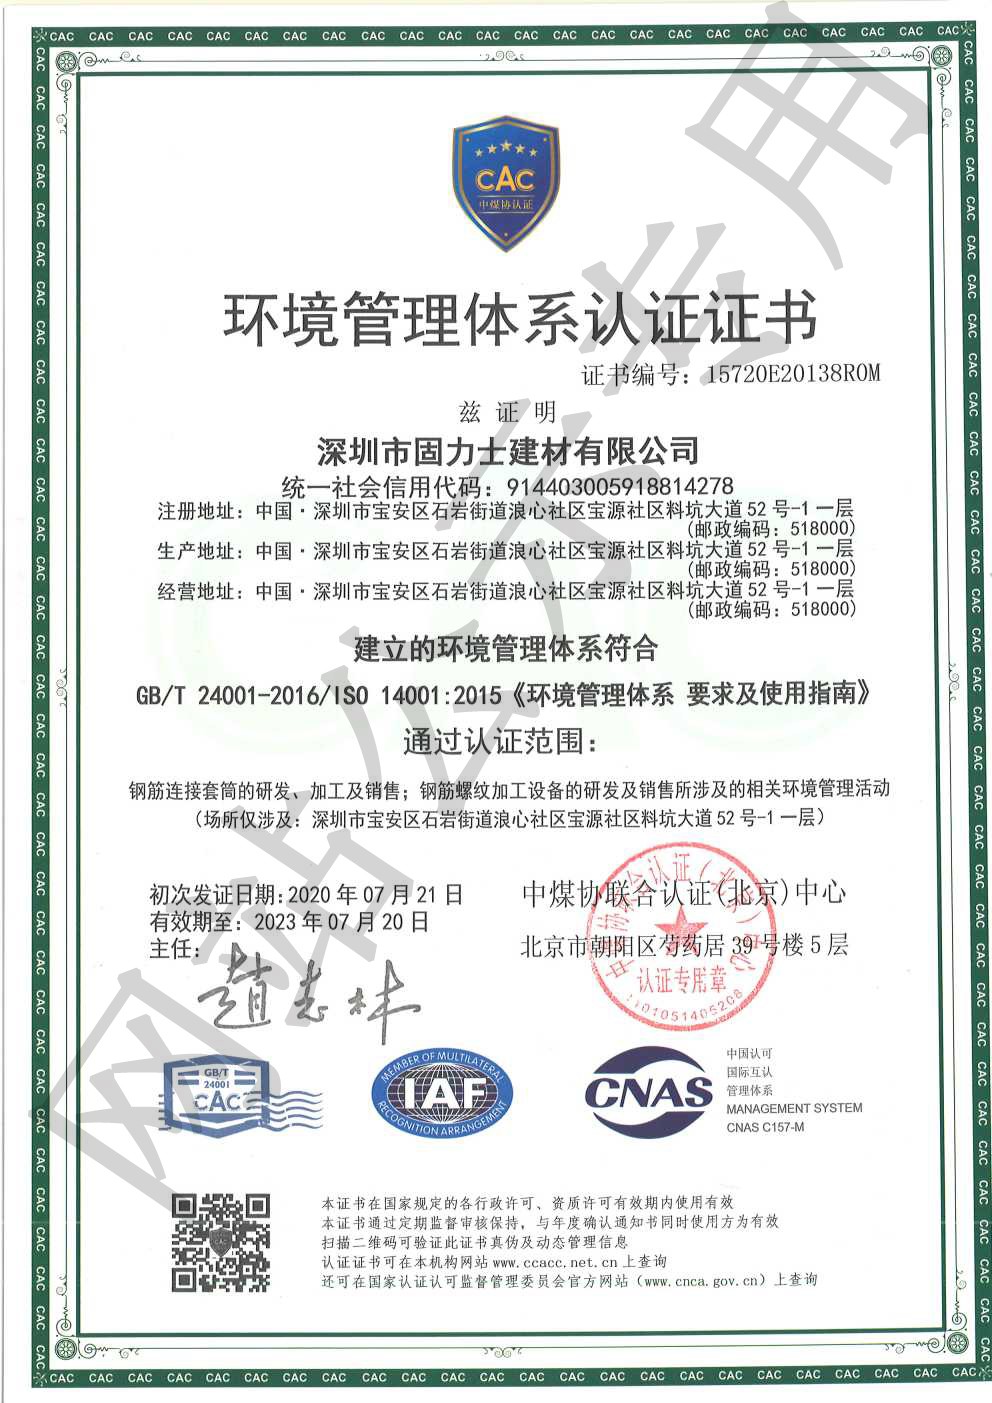 锡林郭勒ISO14001证书